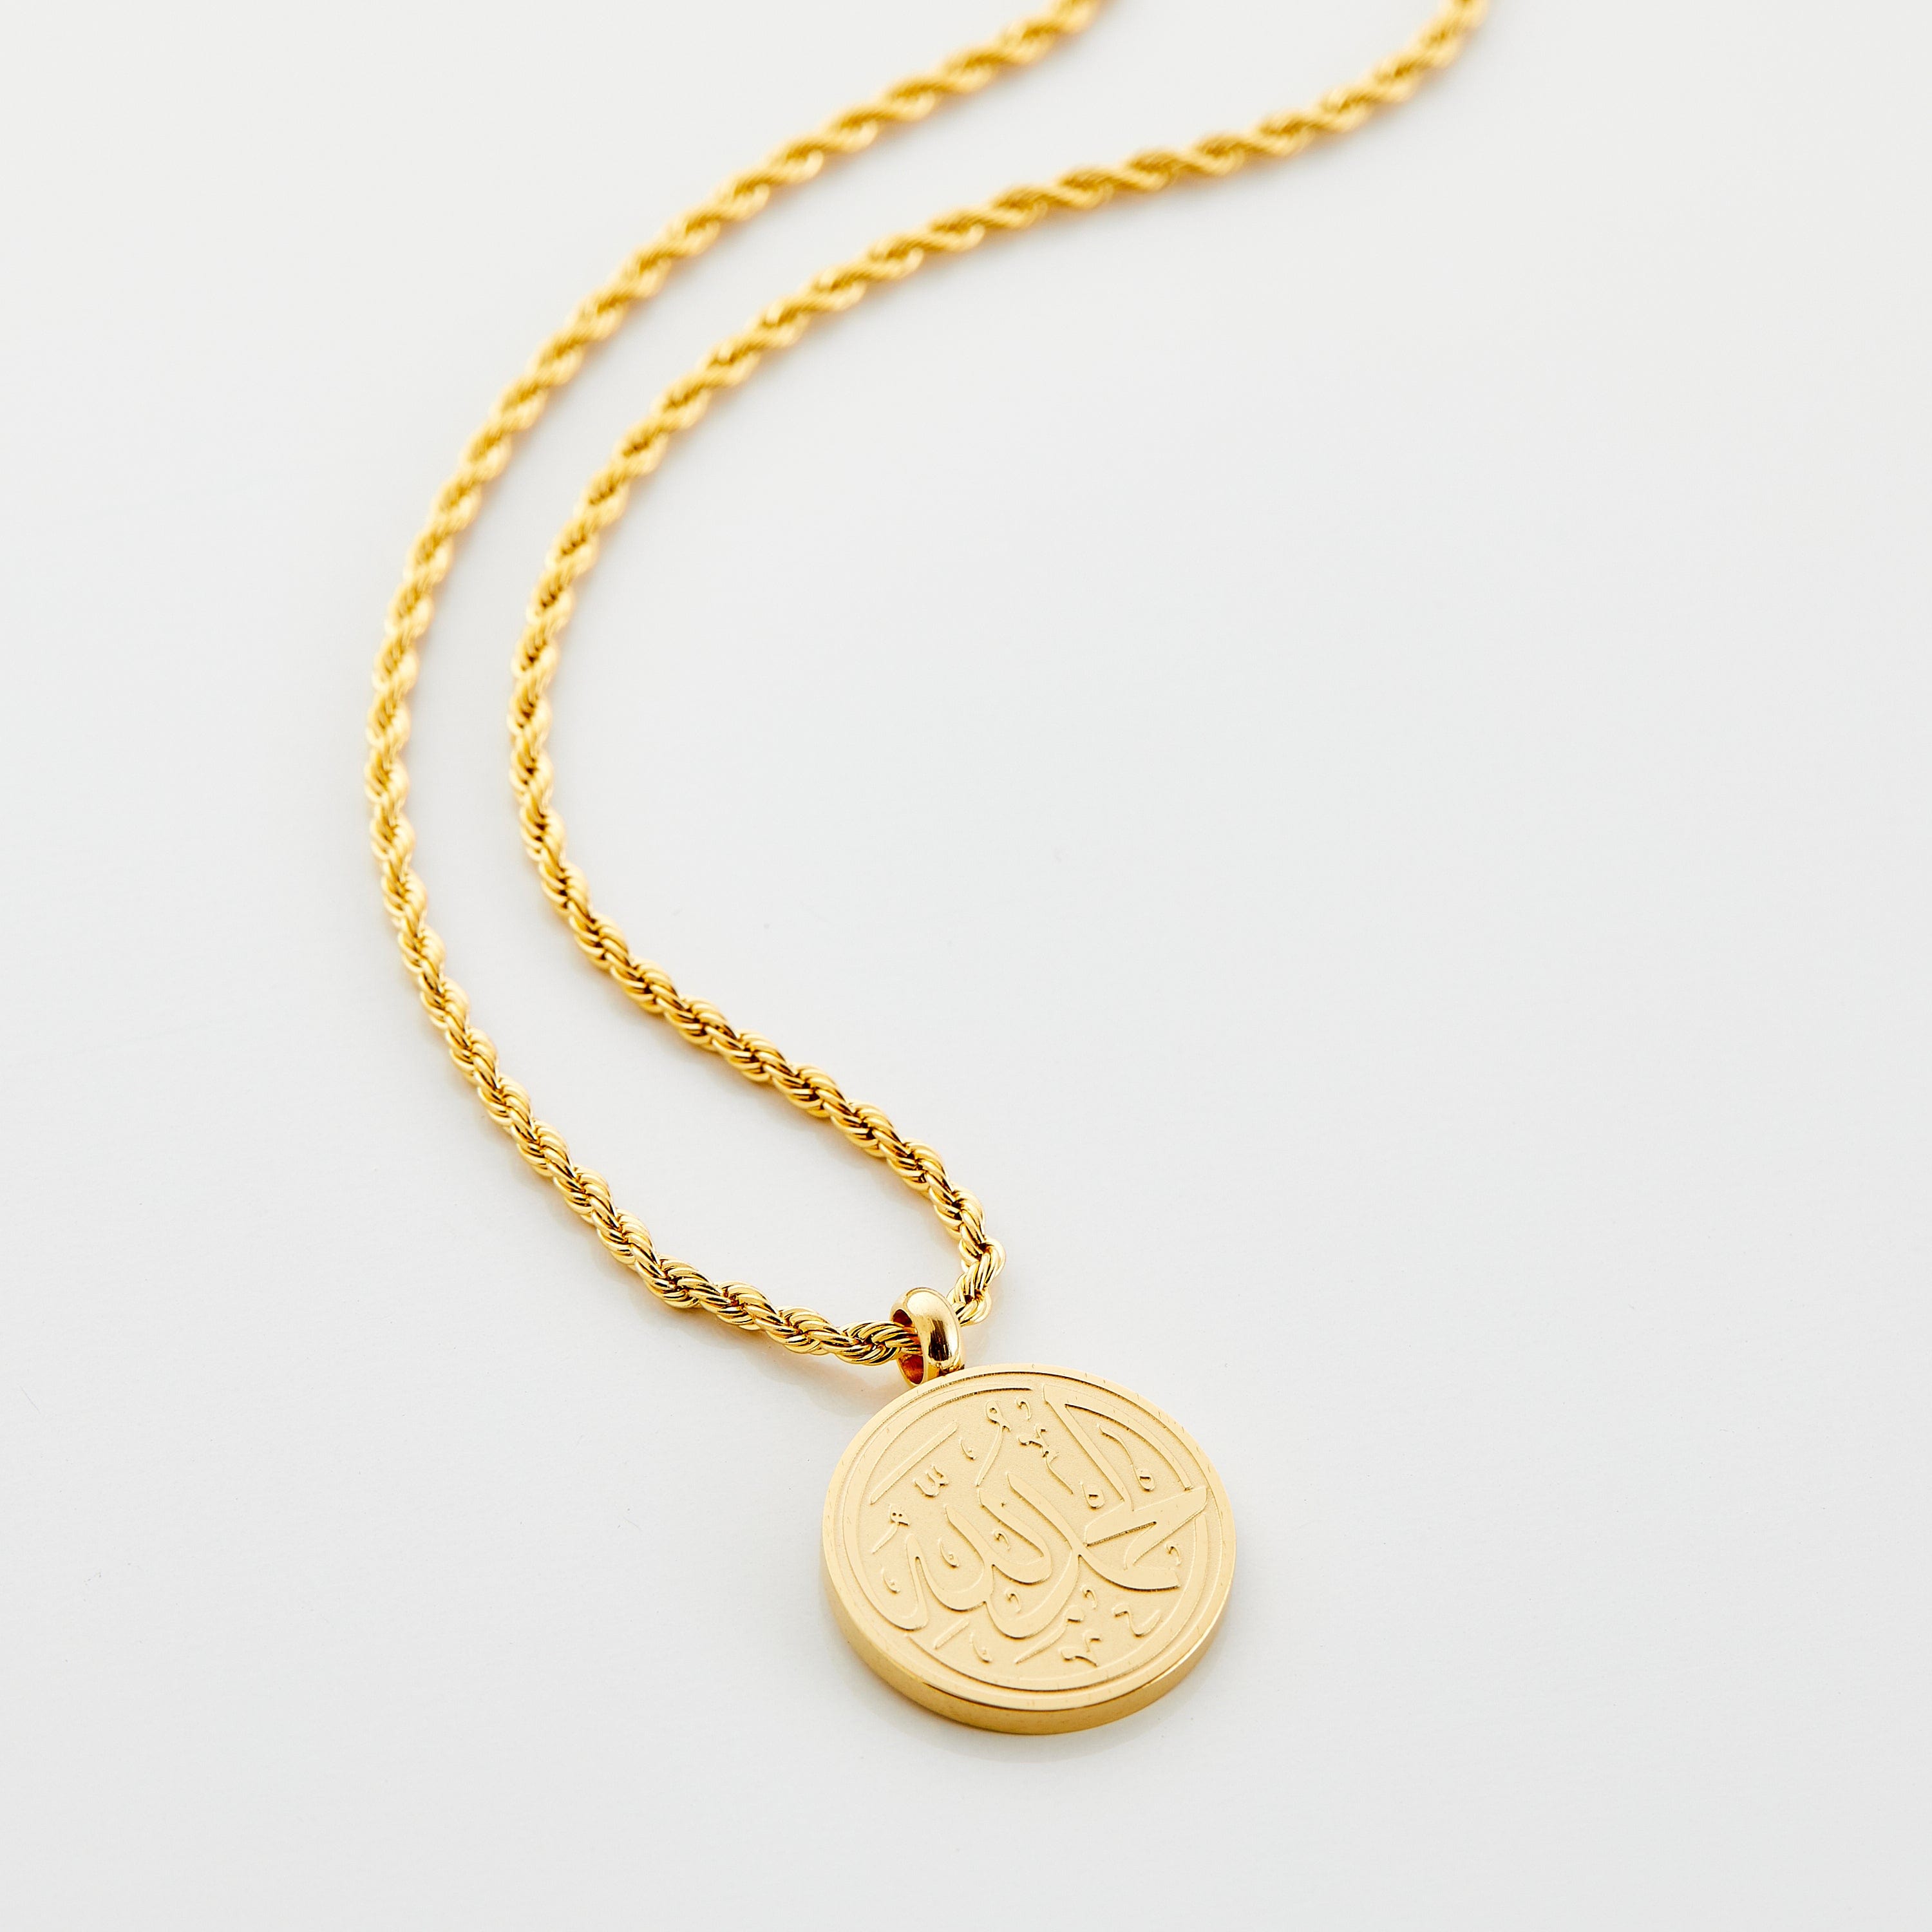 trendy money coin necklace bracelet 24k| Alibaba.com